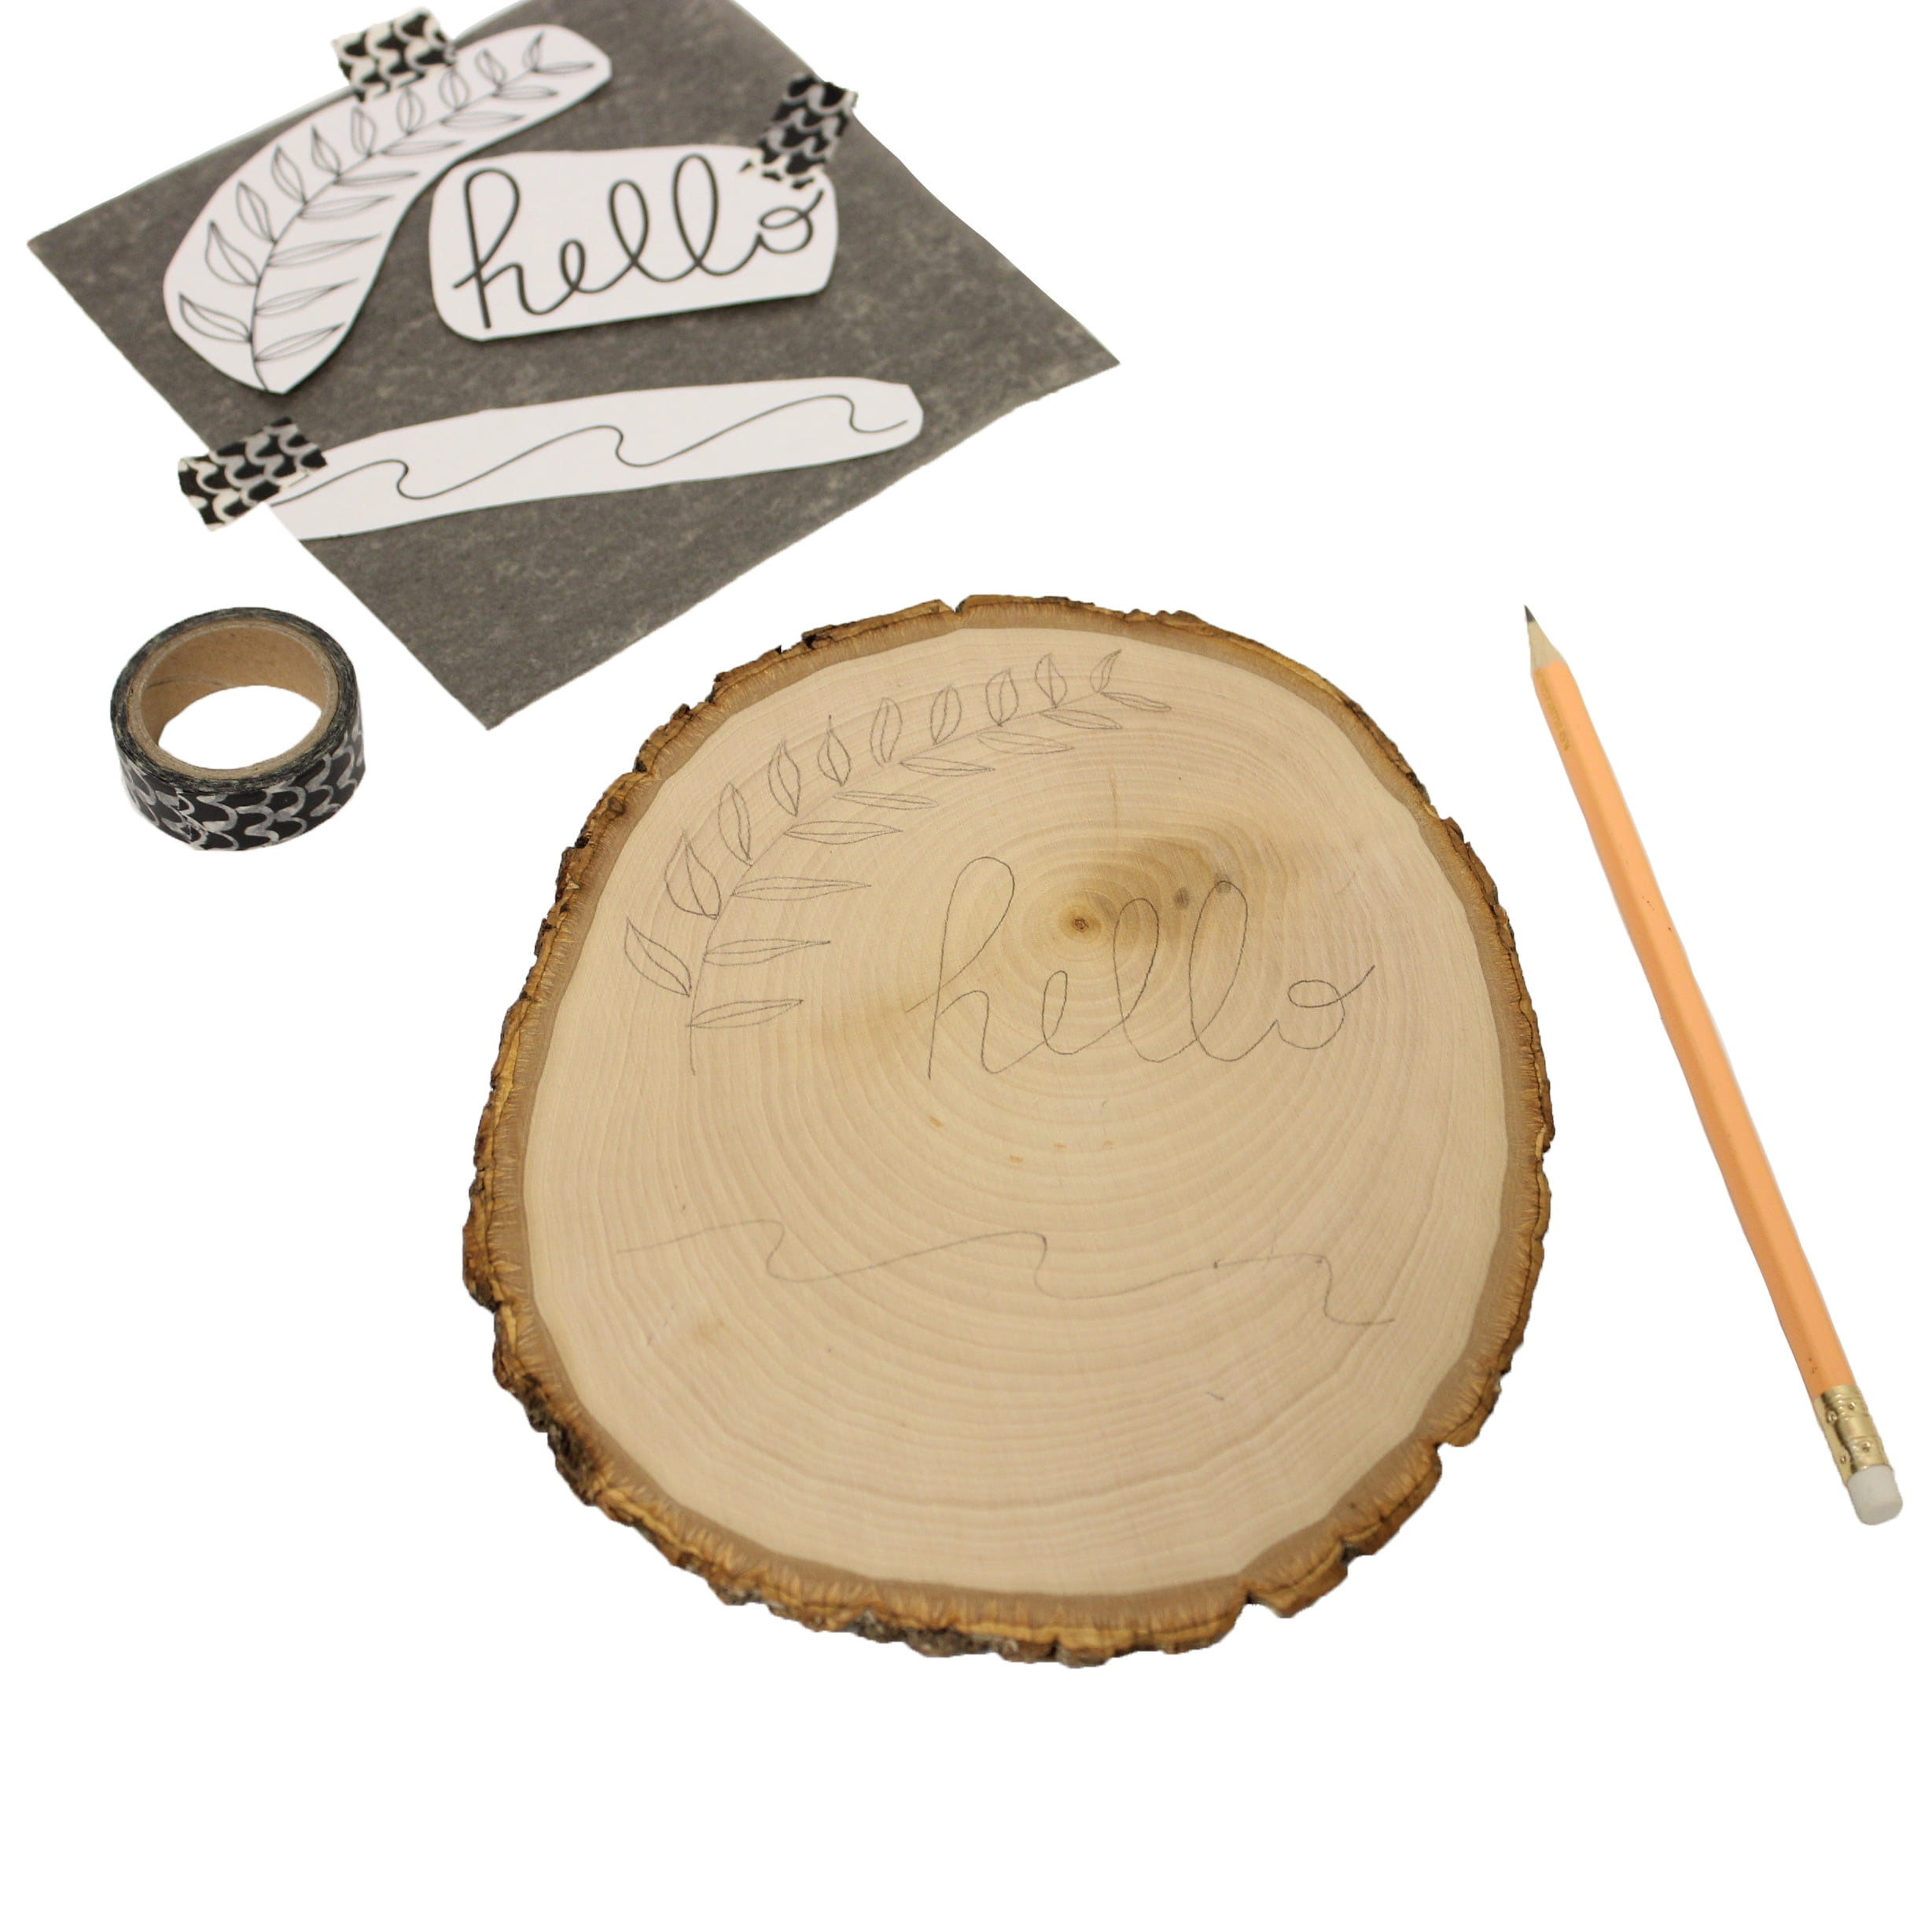 Walnut Hollow Creative Woodburning Kit I